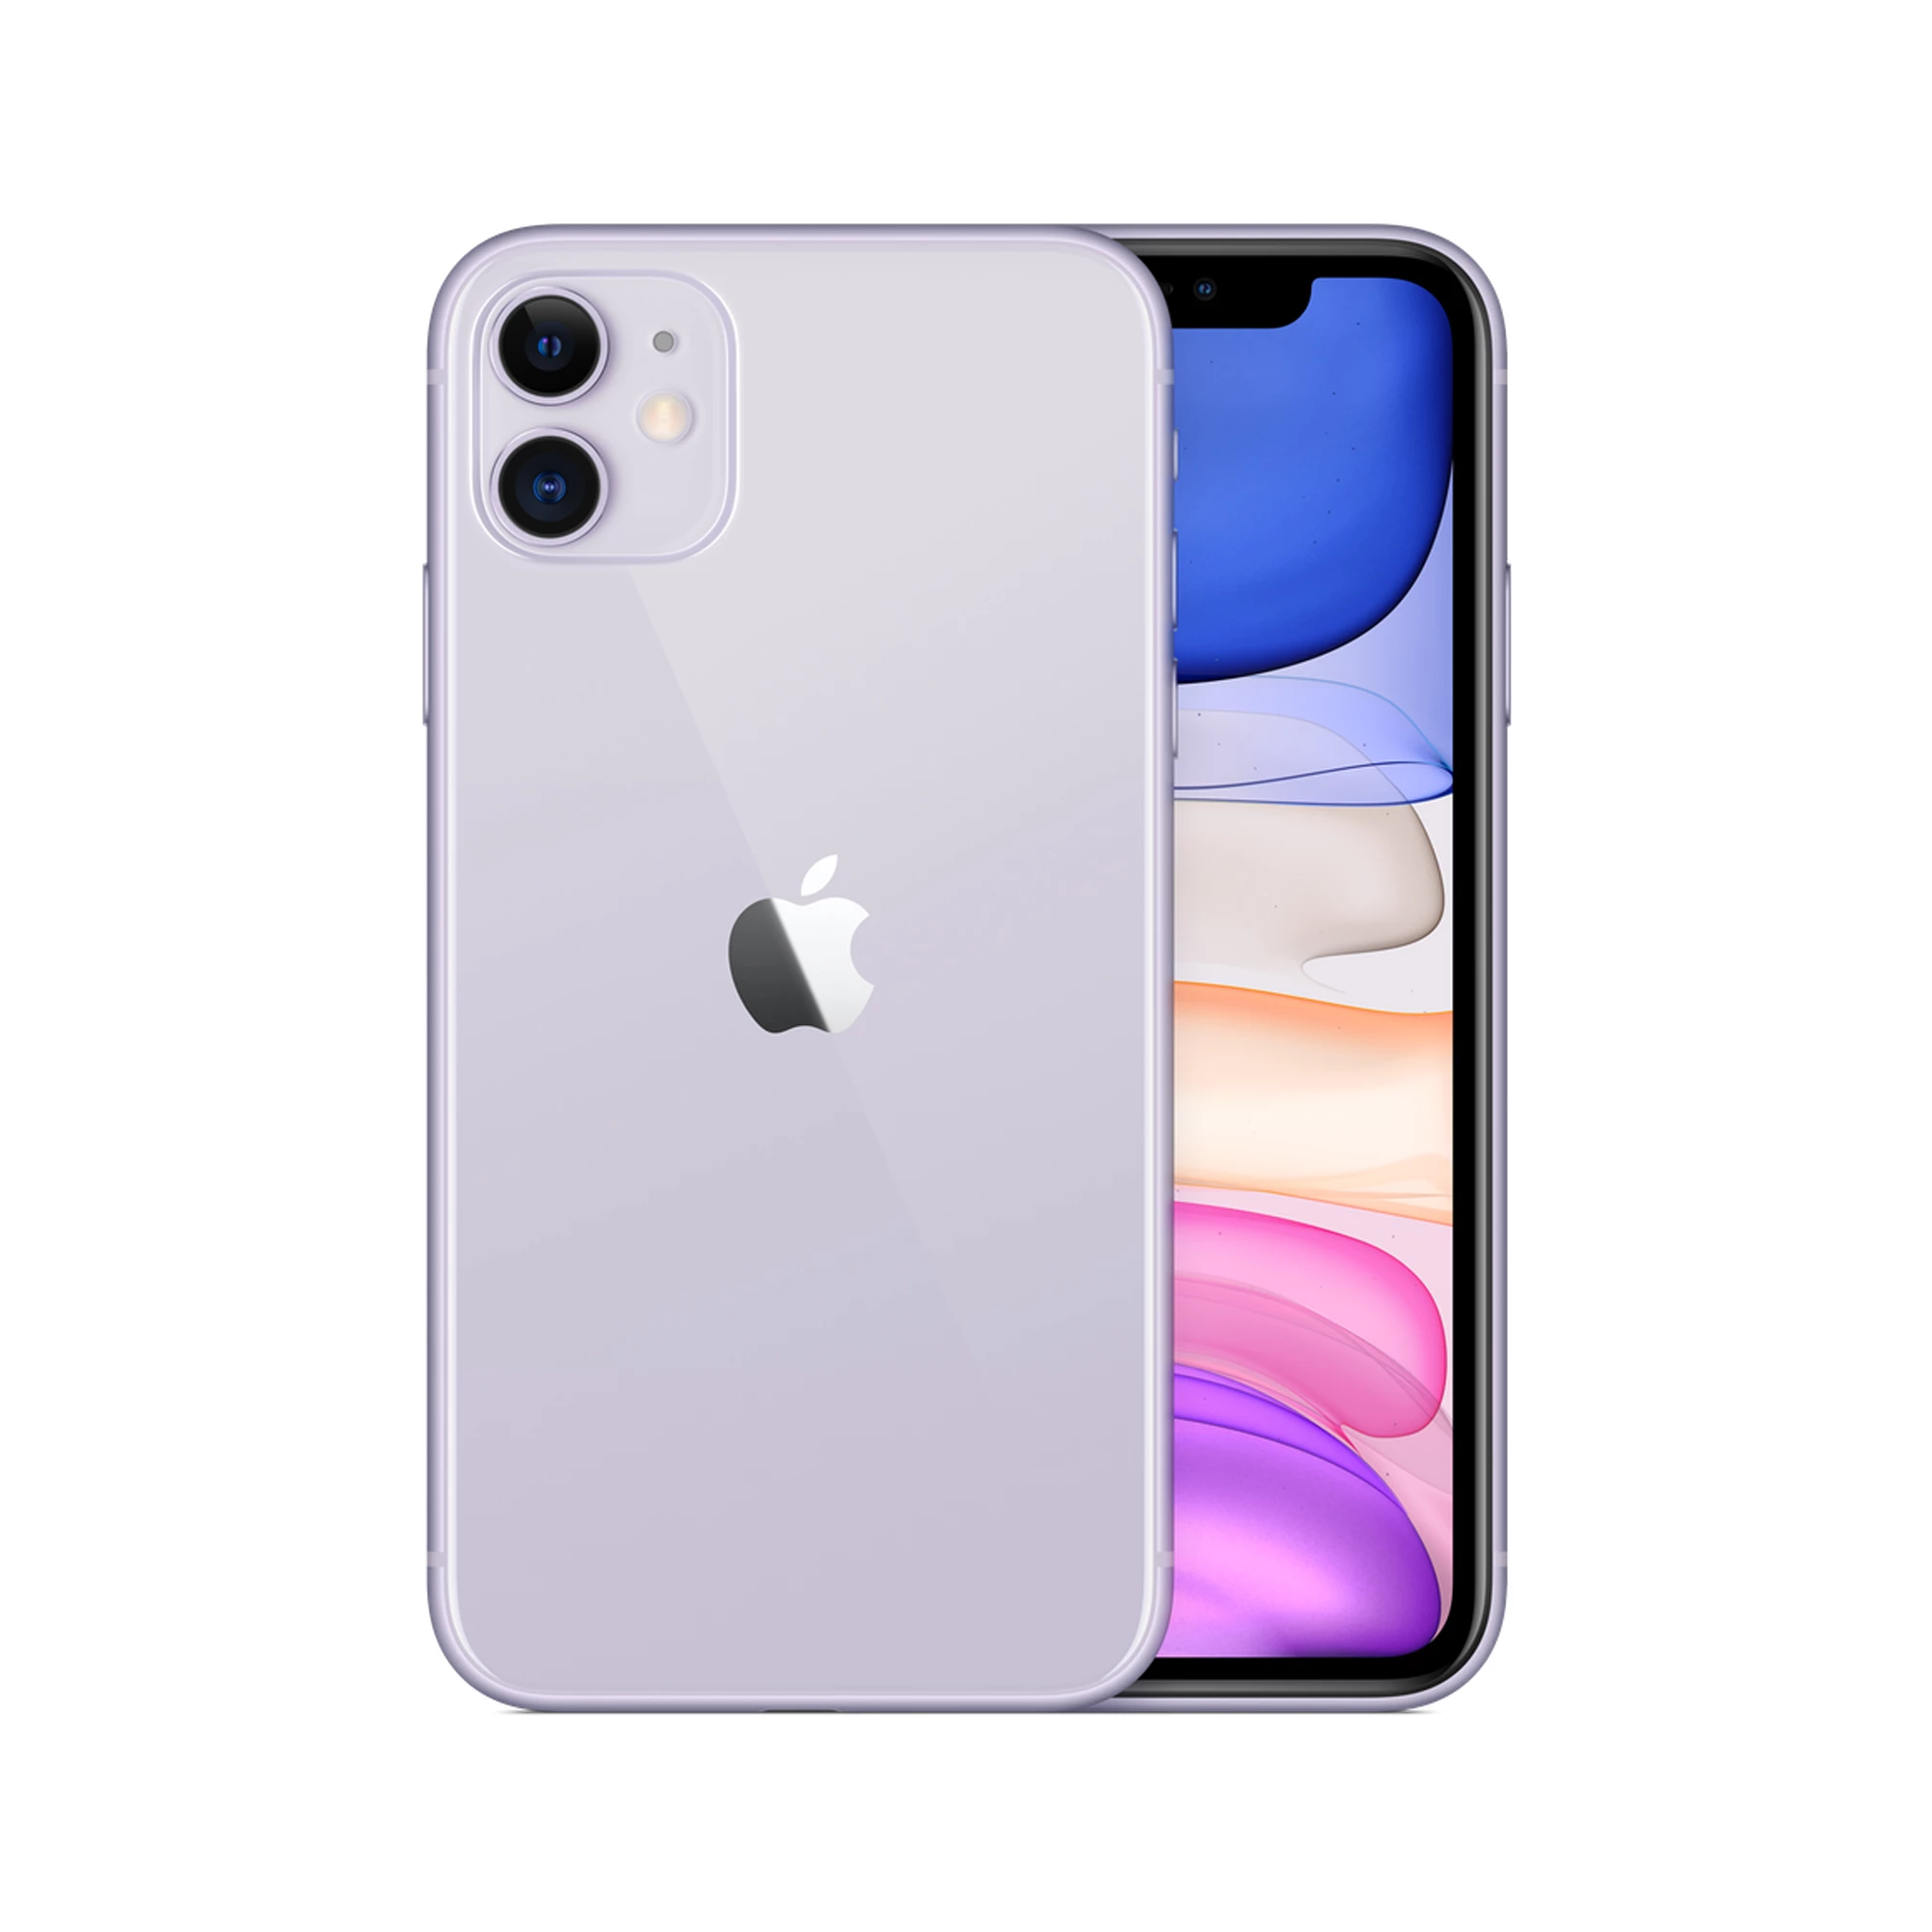 Apple iPhone 11 64GB Purple (MWLC2) Full Box